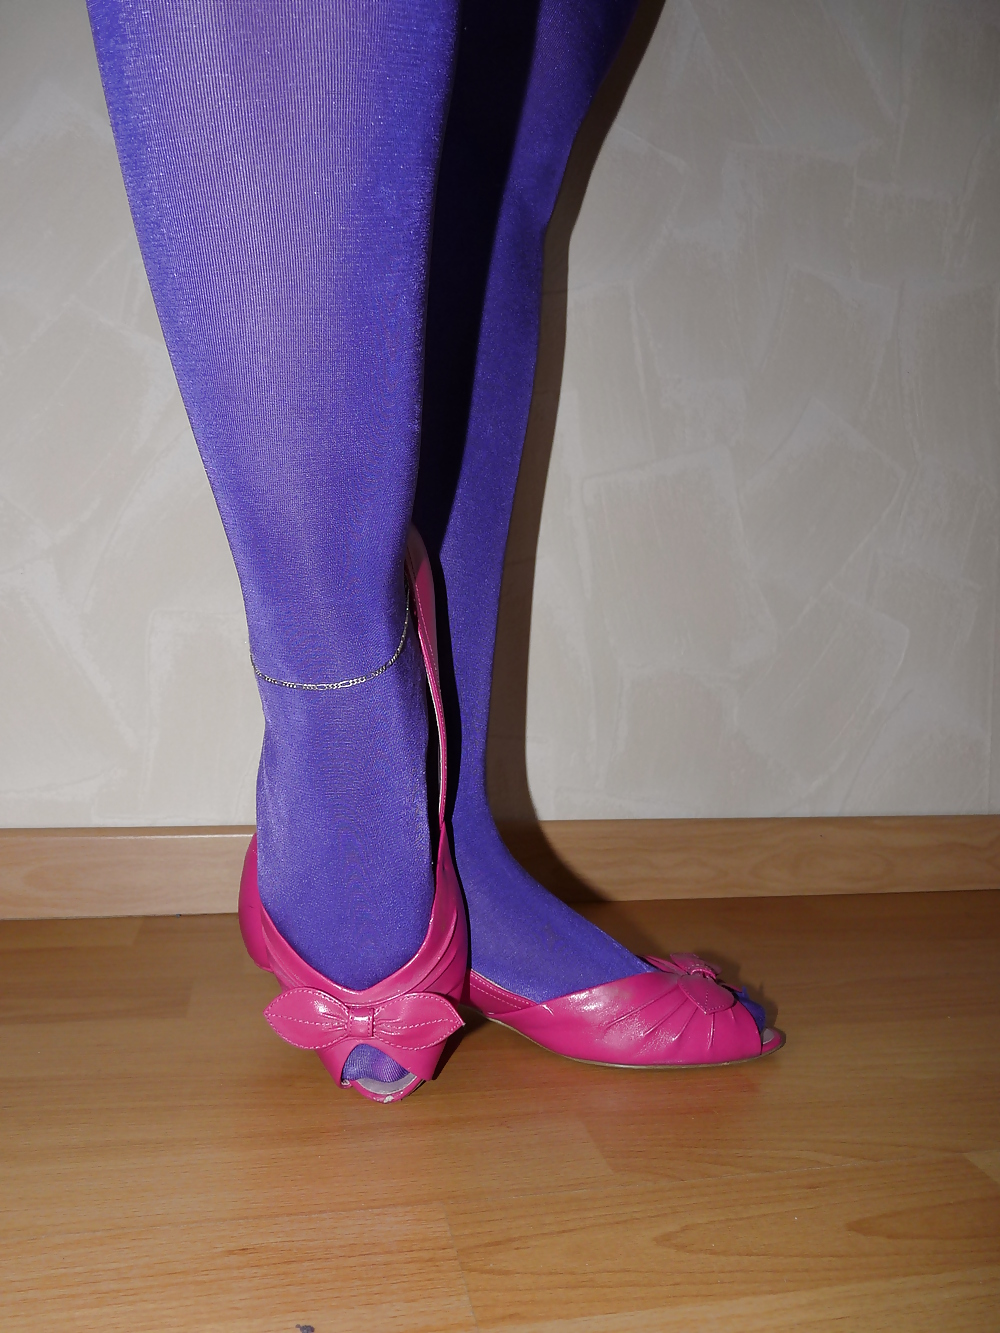 Esposas brillantes pantimedias púrpura rosa peep toes
 #15417067